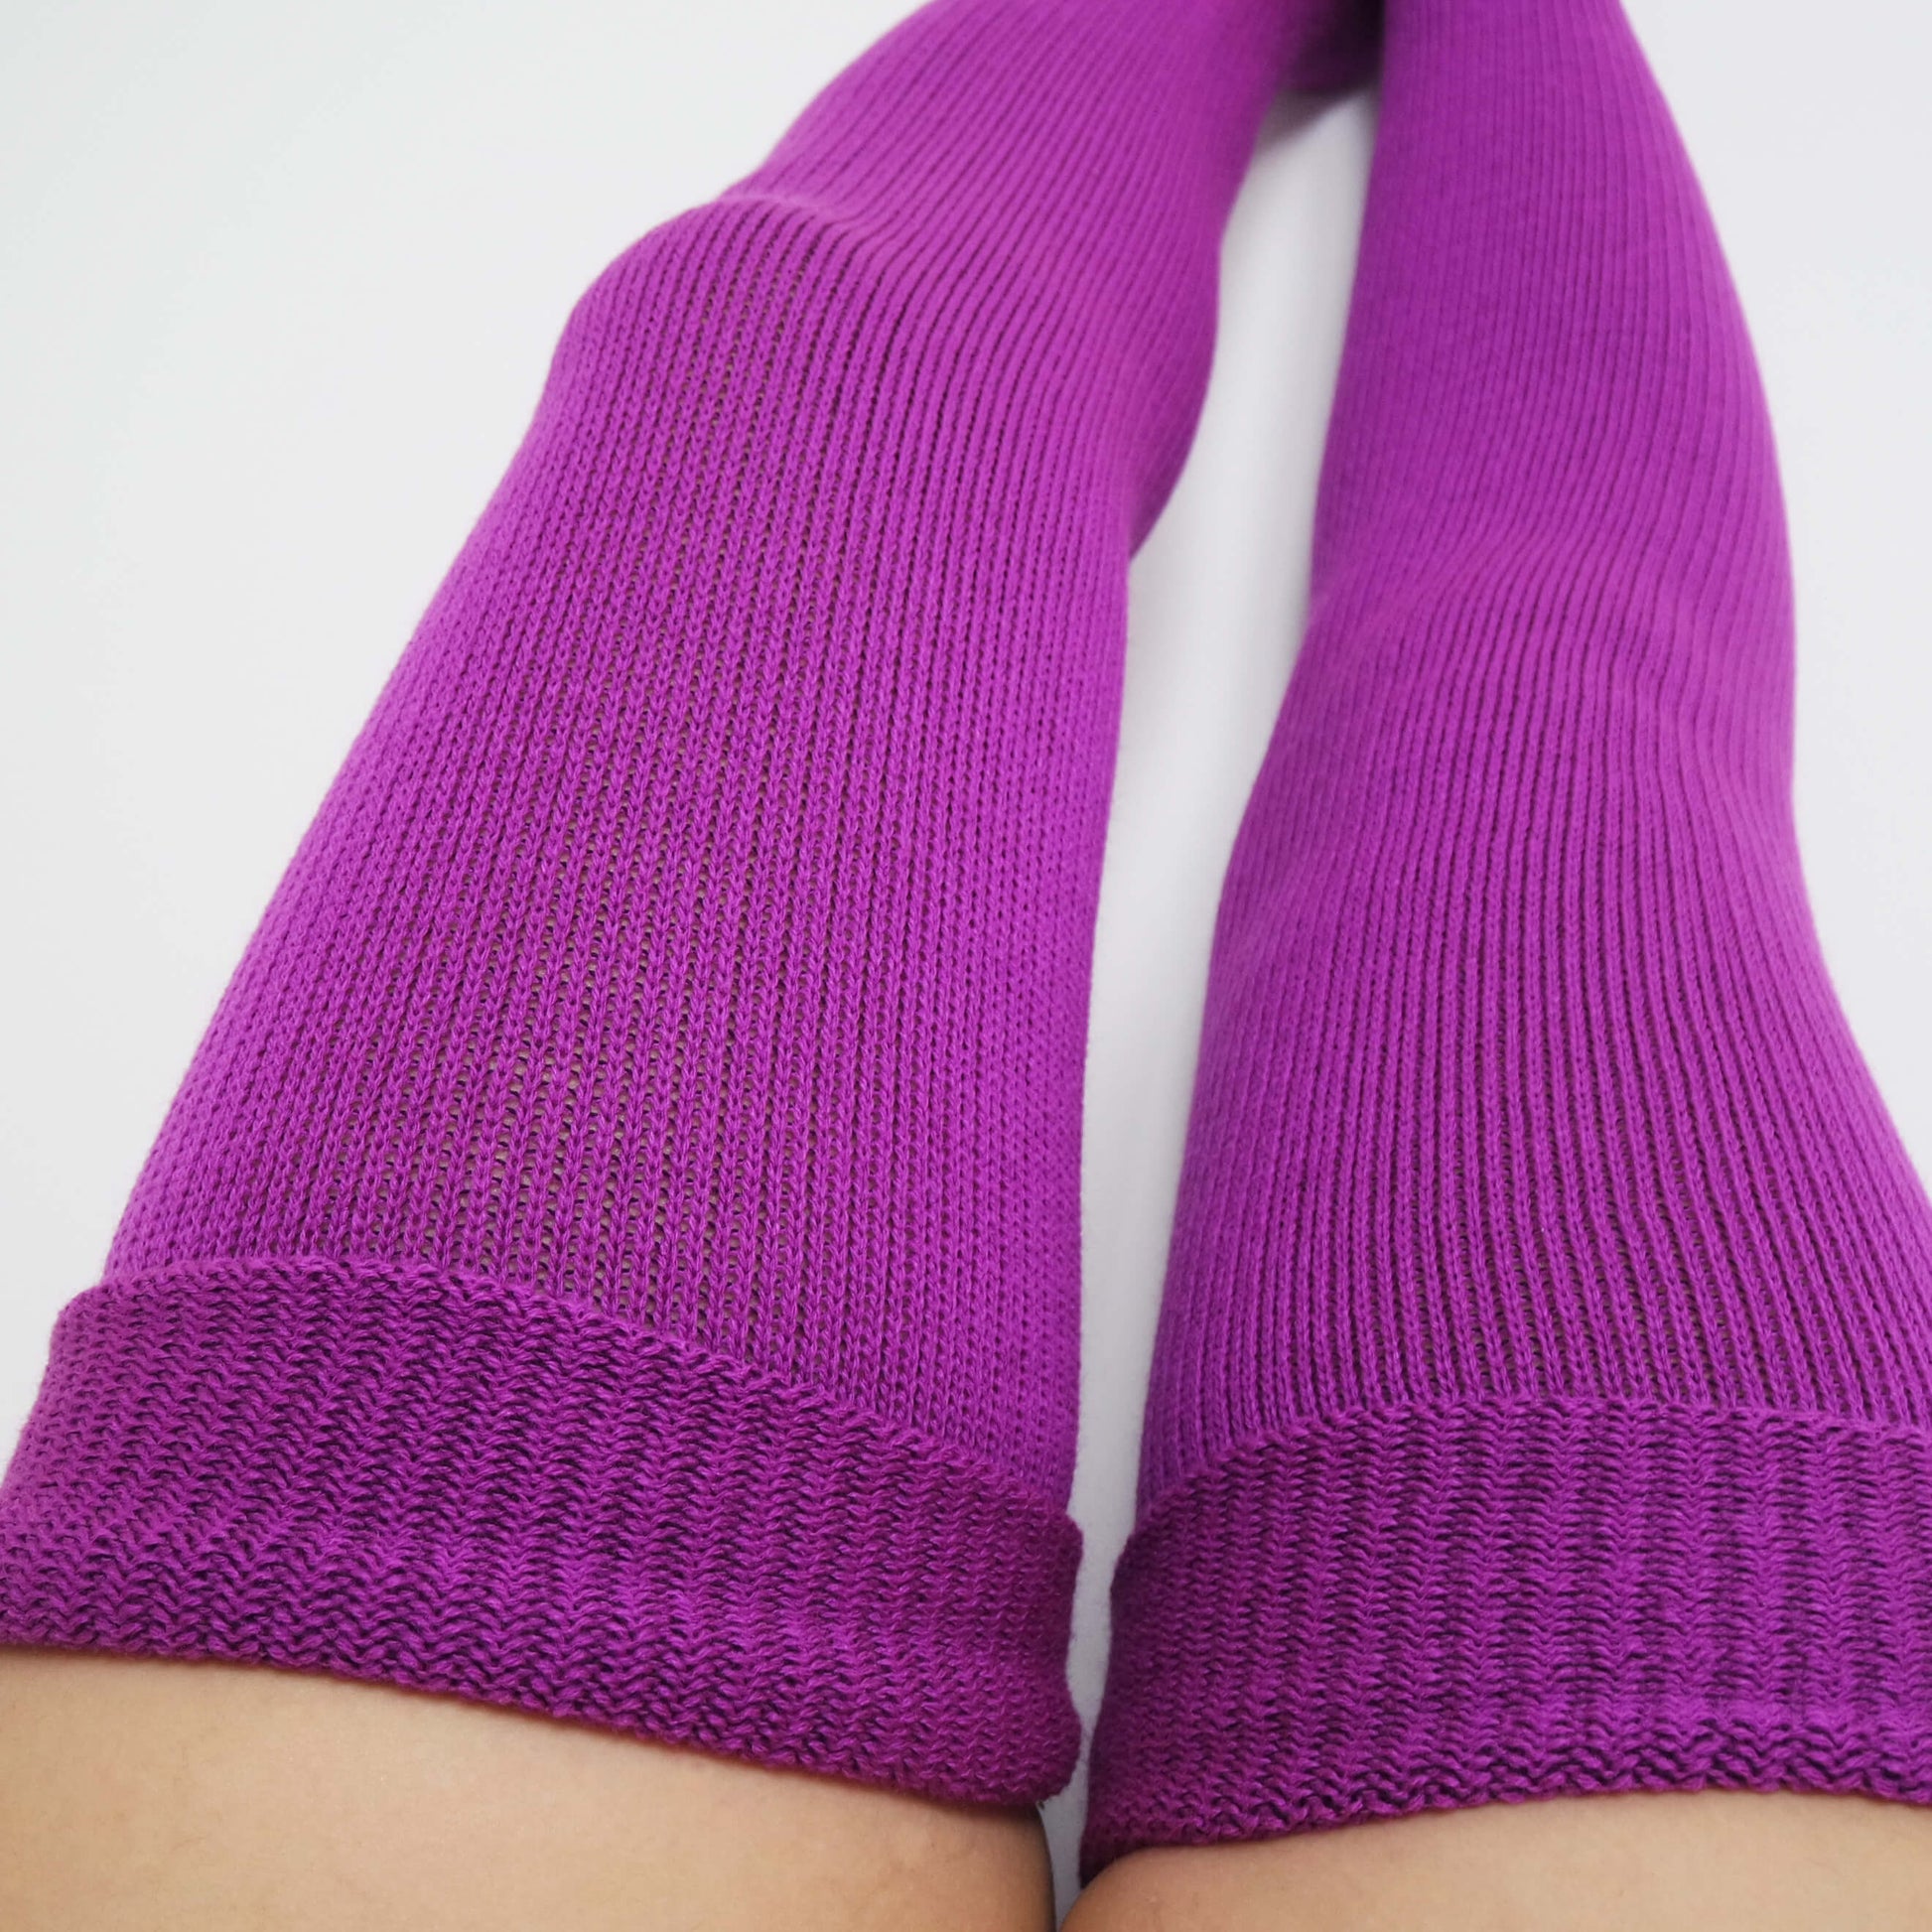 Purple Opaque Thigh High Stockings